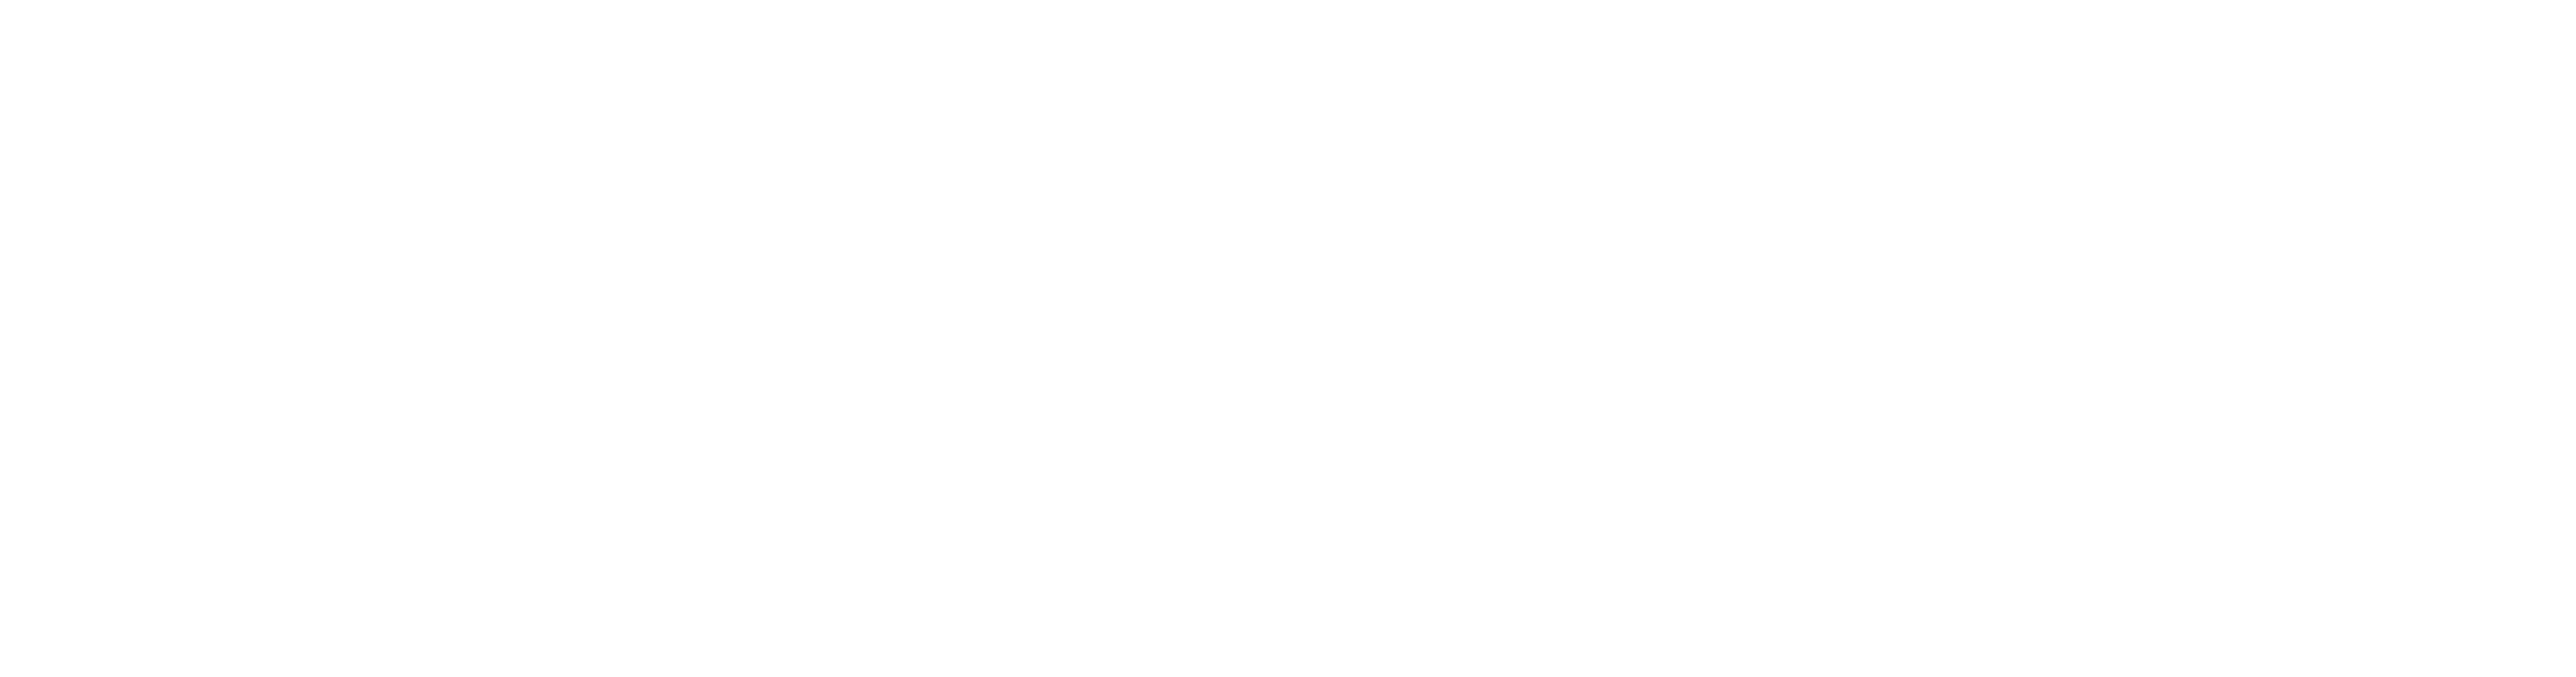 Facile Energy Logo